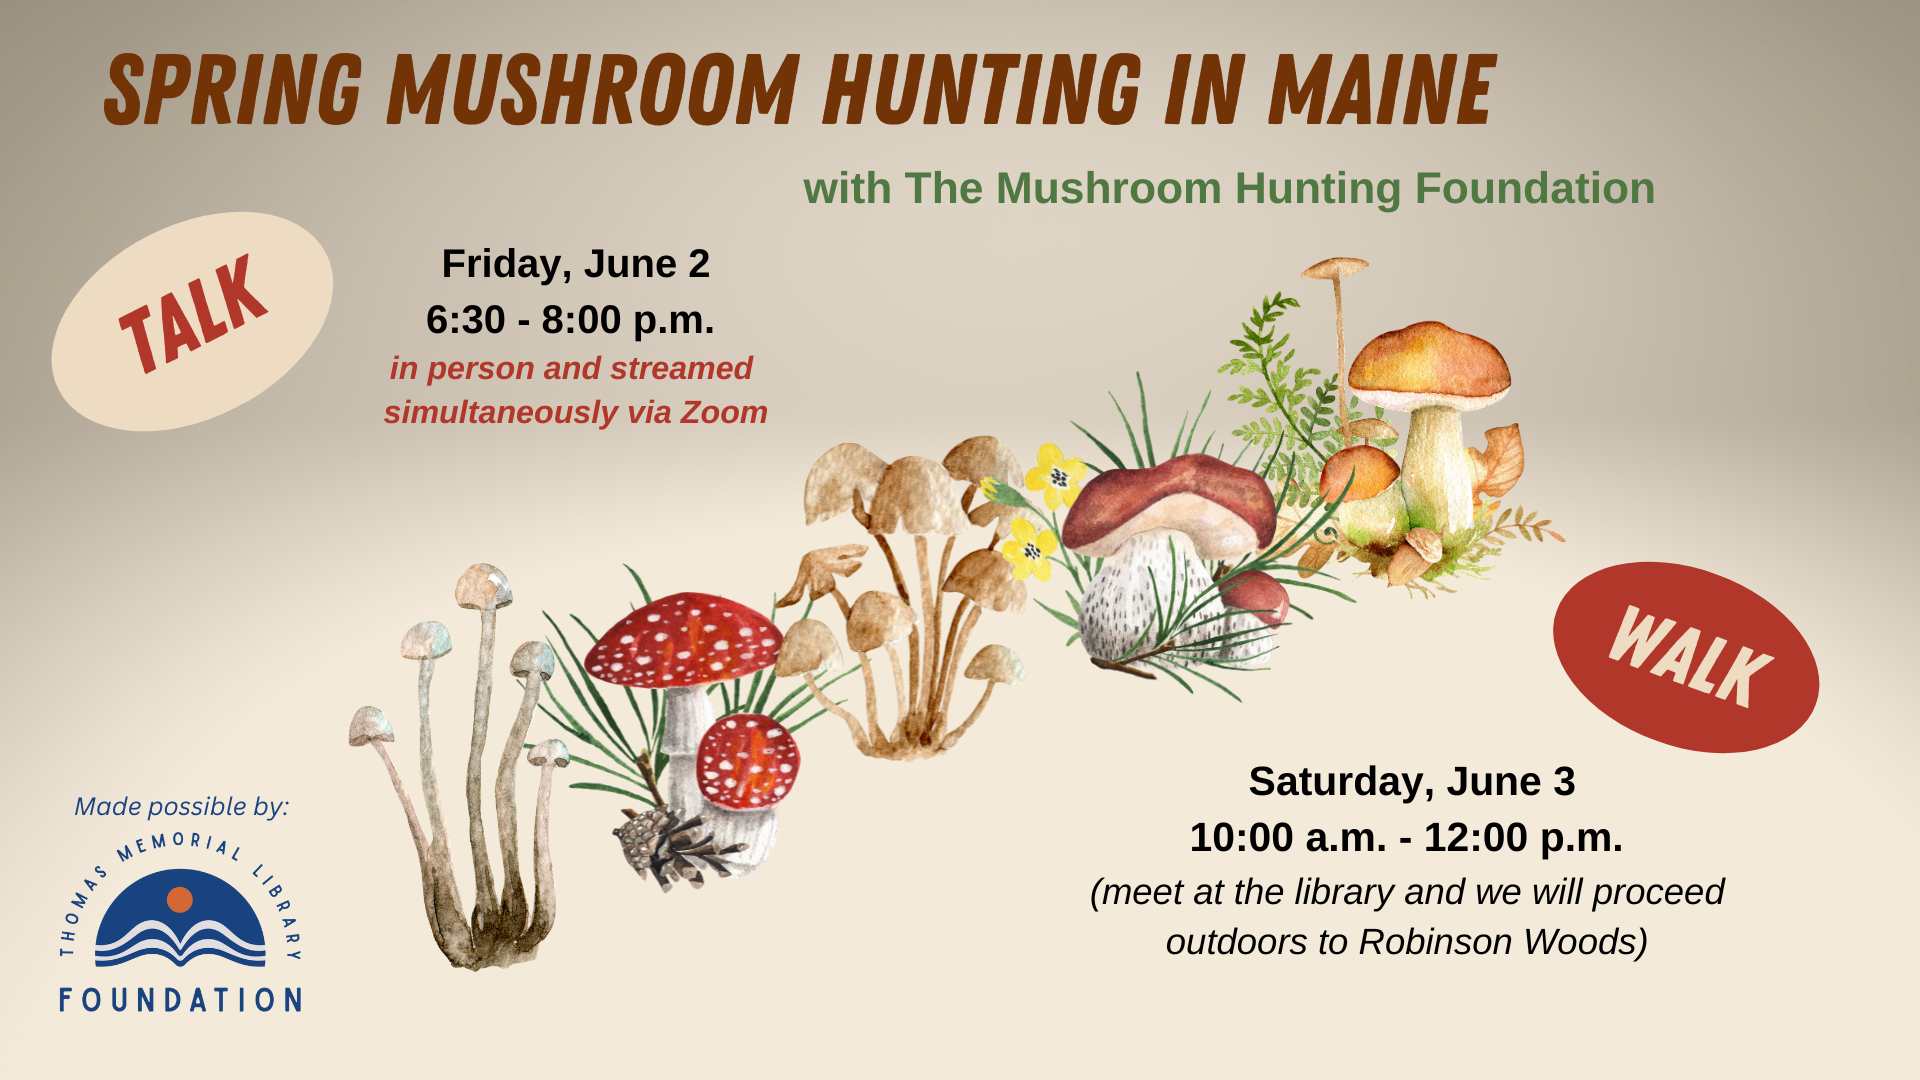 Spring Mushroom Hunting in Maine talk and walk